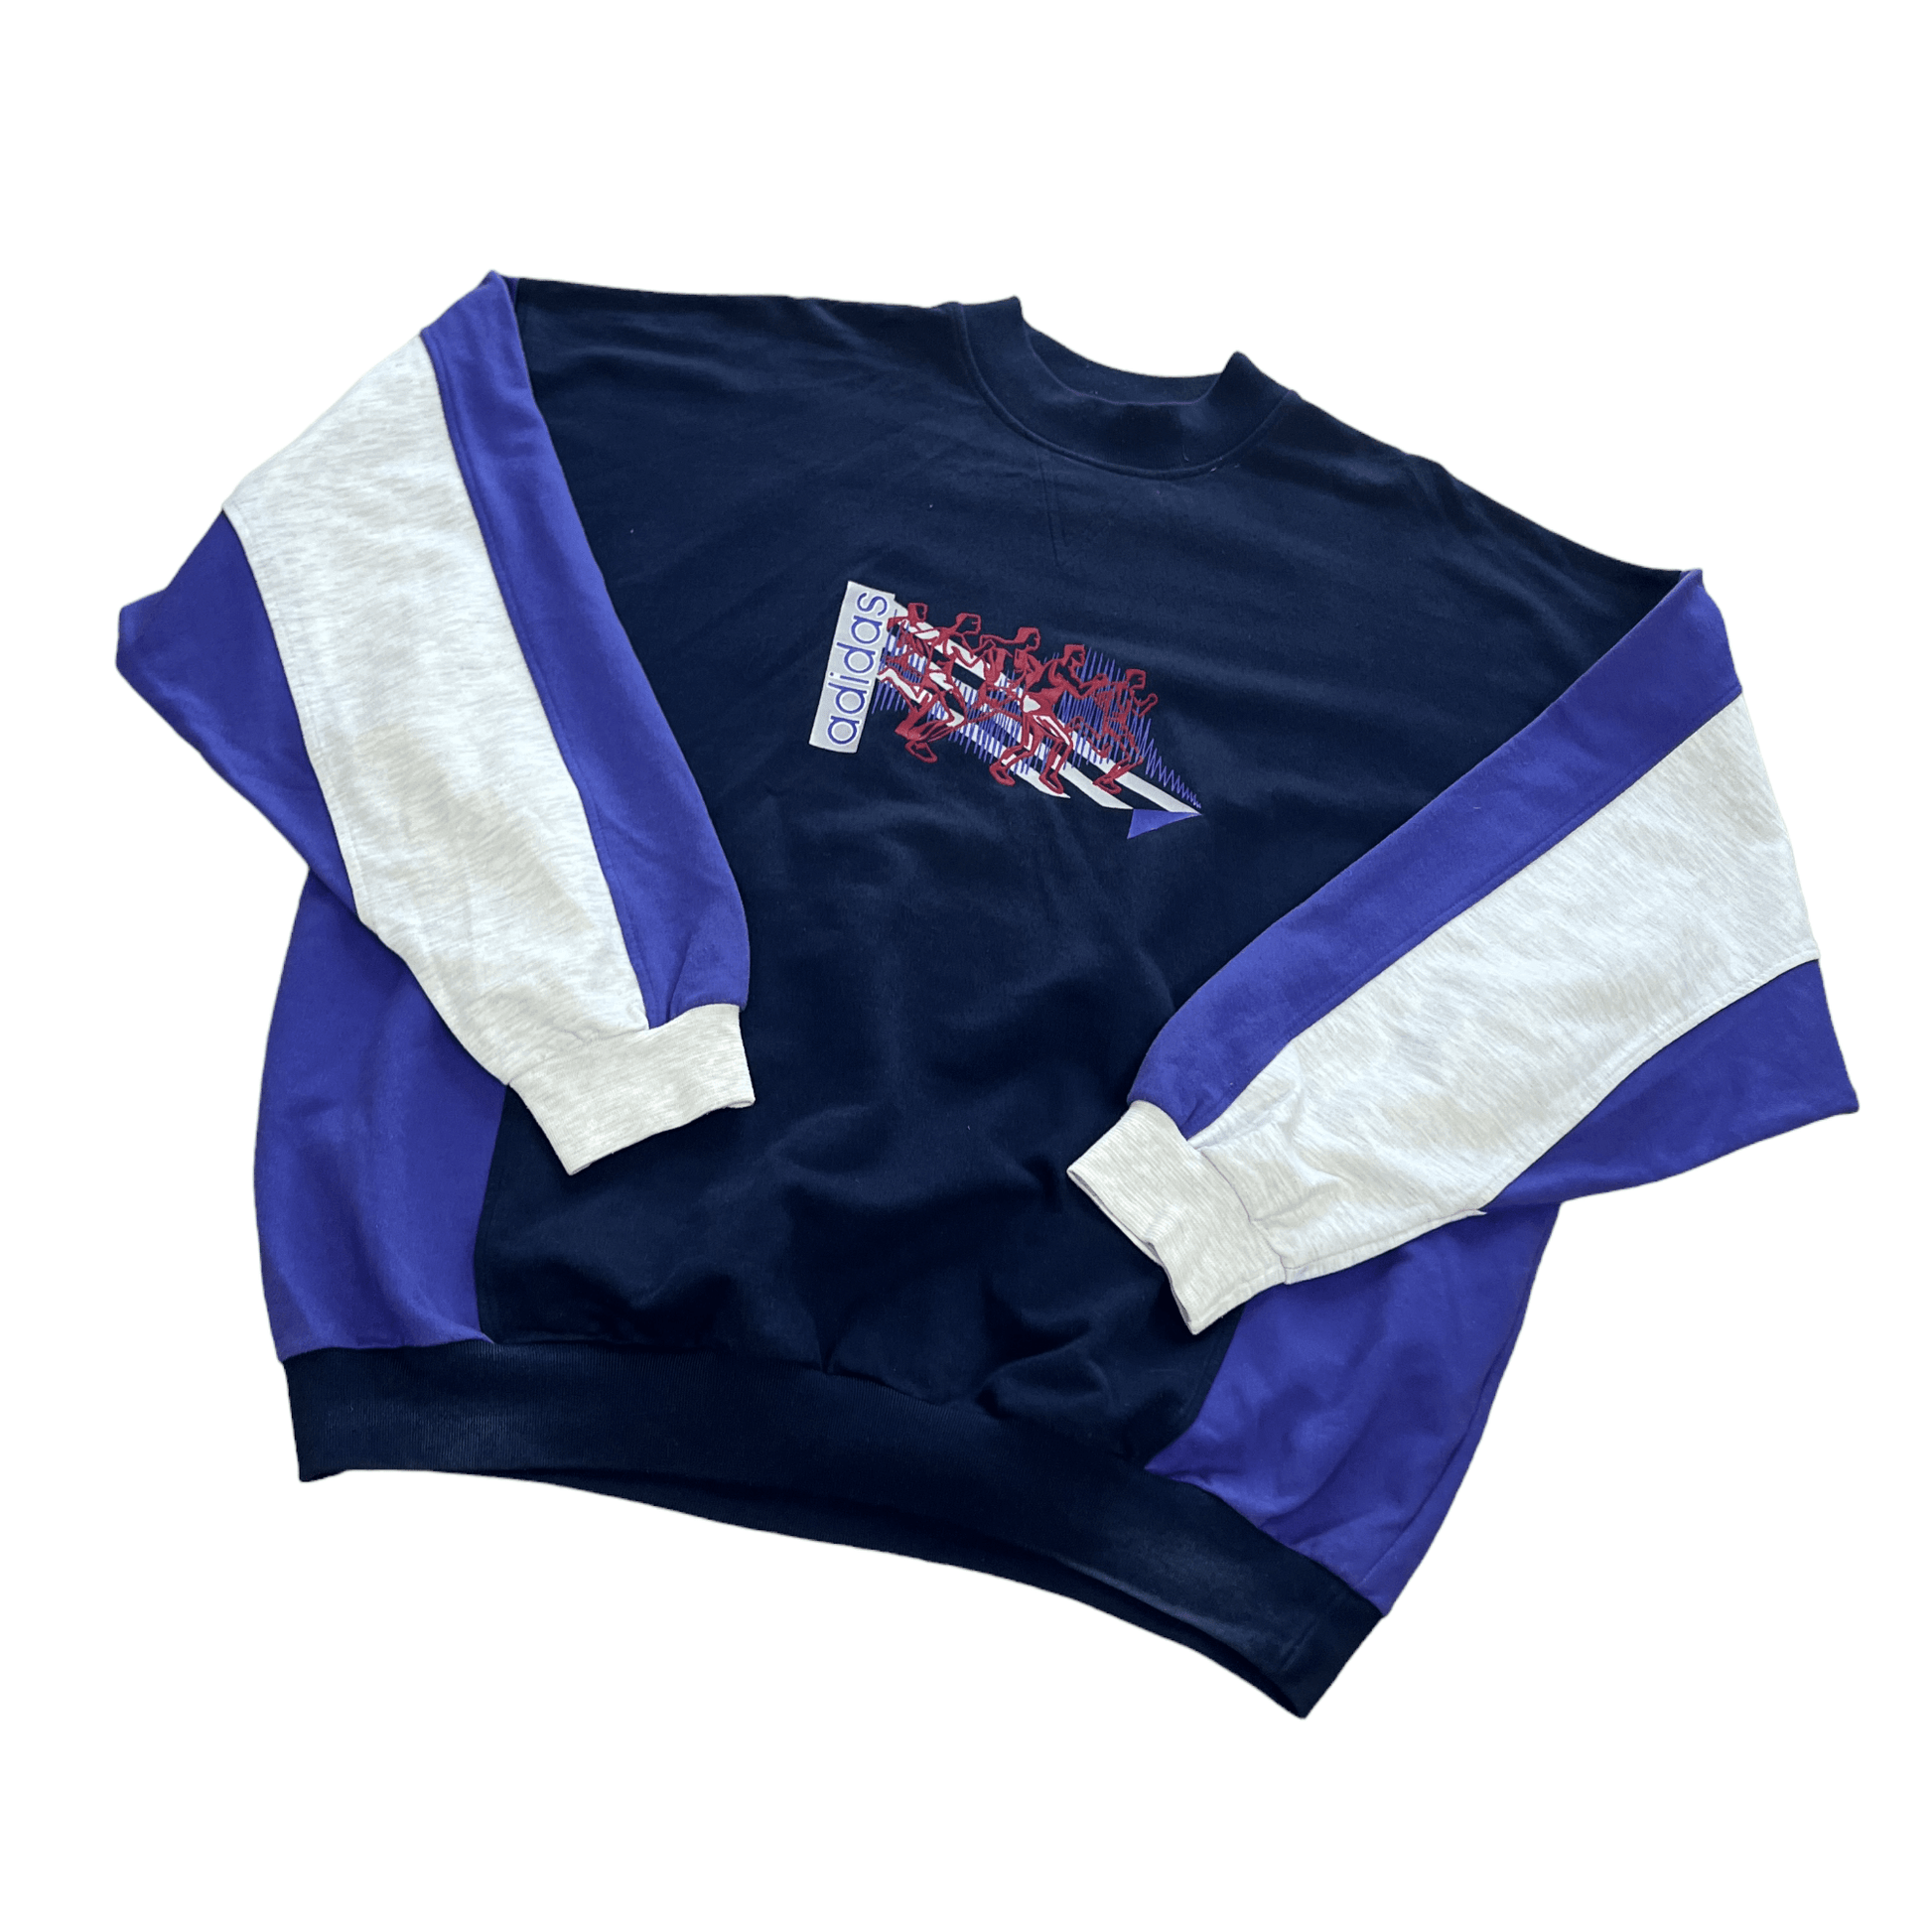 Vintage 90s Navy Blue, Purple + Grey Adidas Sweatshirt - Extra Large - The Streetwear Studio